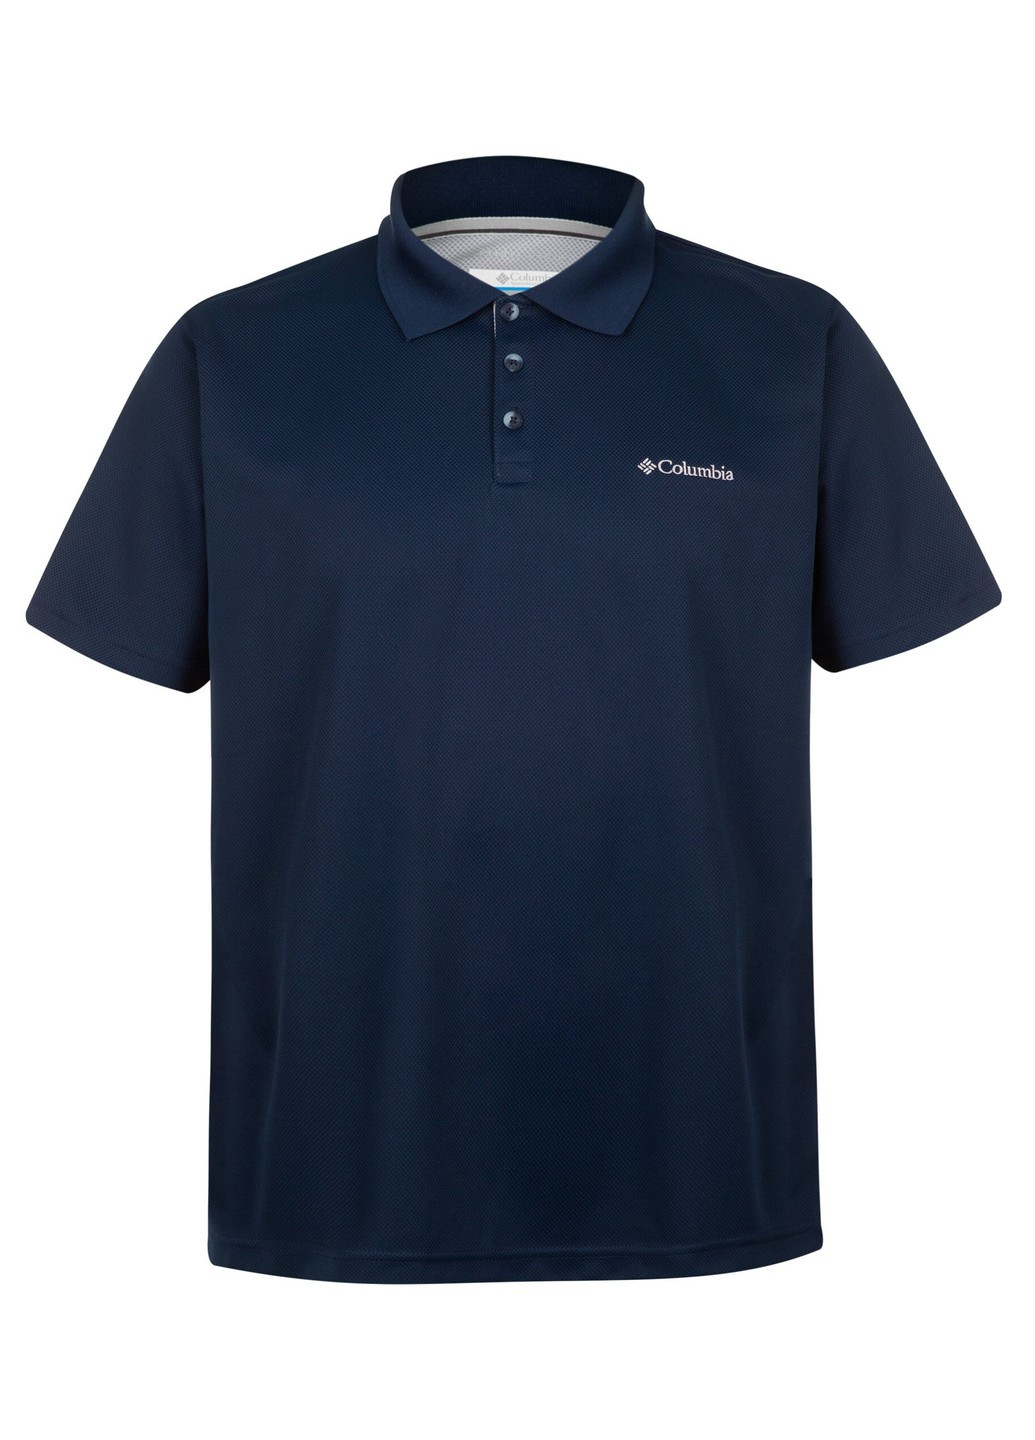 Темно-синяя футболка-1772055-010 m рубашка-поло мужская utilizer™ polo черный р.m для мужчин Columbia